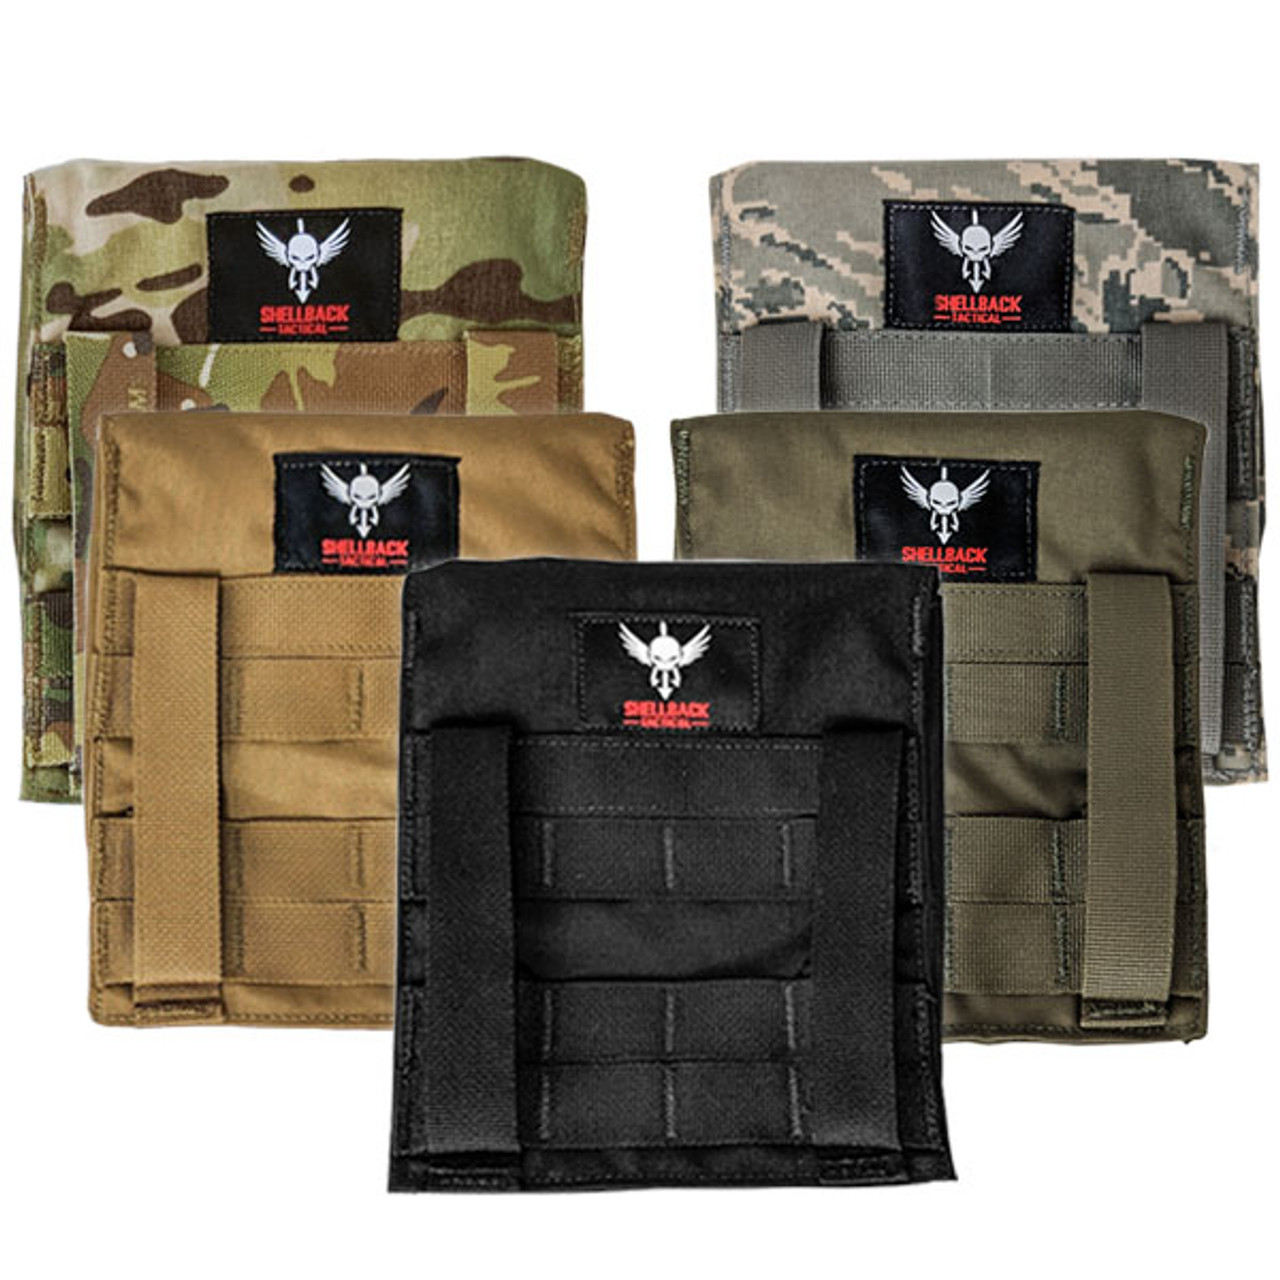 Shellback Tactical Side Armor Plate Pockets